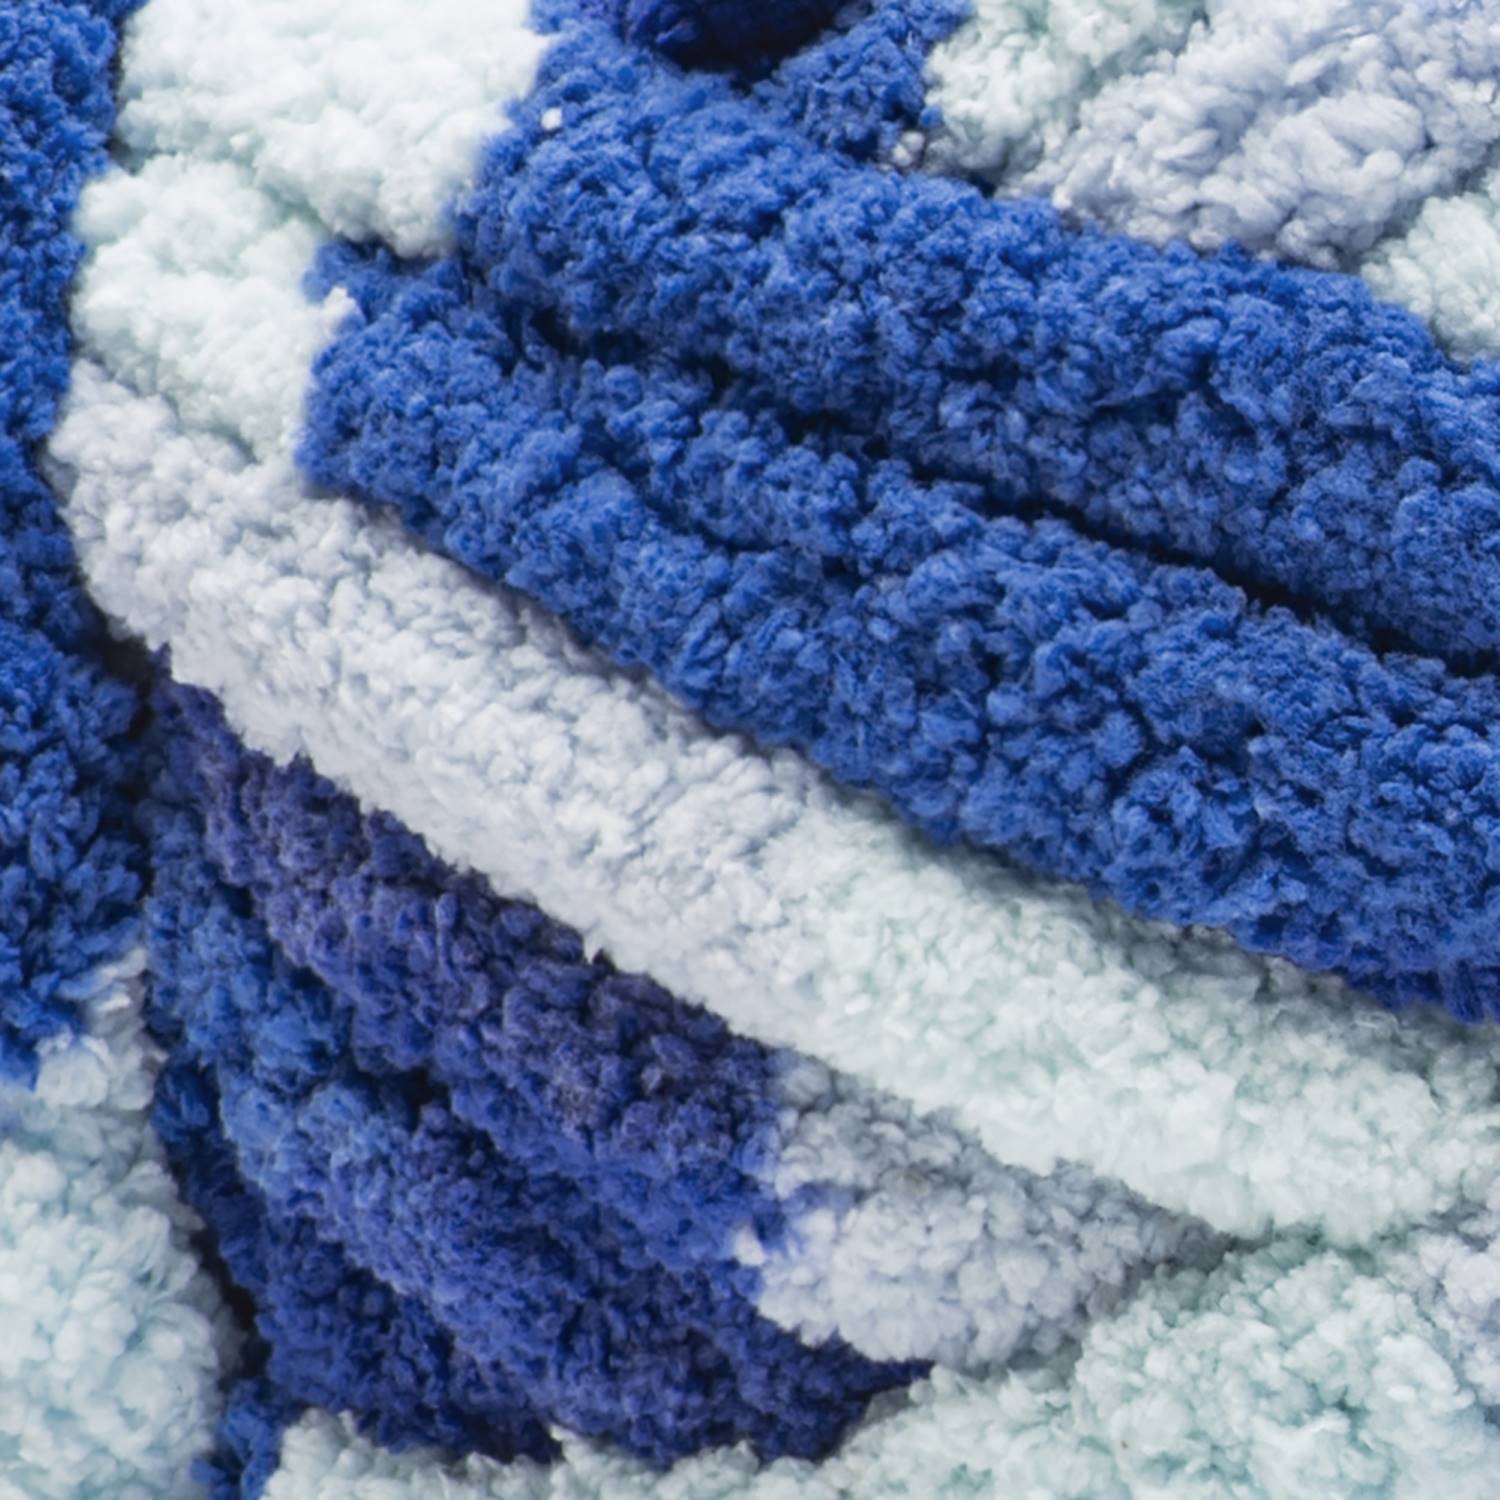 Bernat Blanket Extra Thick Pink DUST Yarn - 1 Pack of 600g/21oz - Polyester  - 7 Jumbo - Knitting, Crocheting, Crafts & Amigurumi, Chunky Chenille Yarn